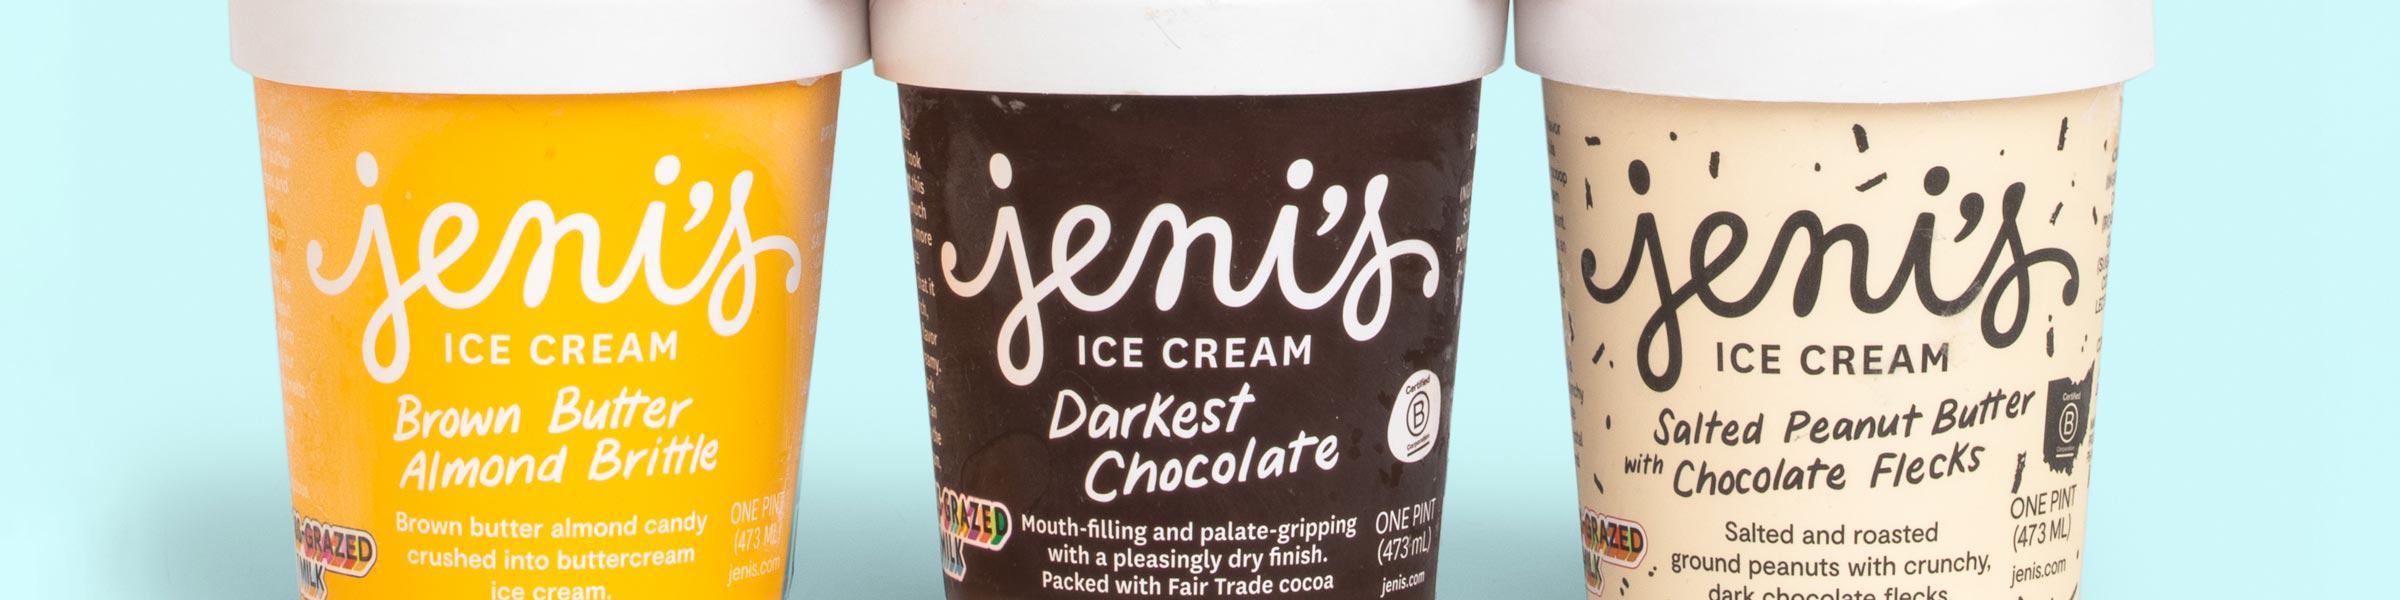 Jeni's Splendid Ice Creams Bethesda